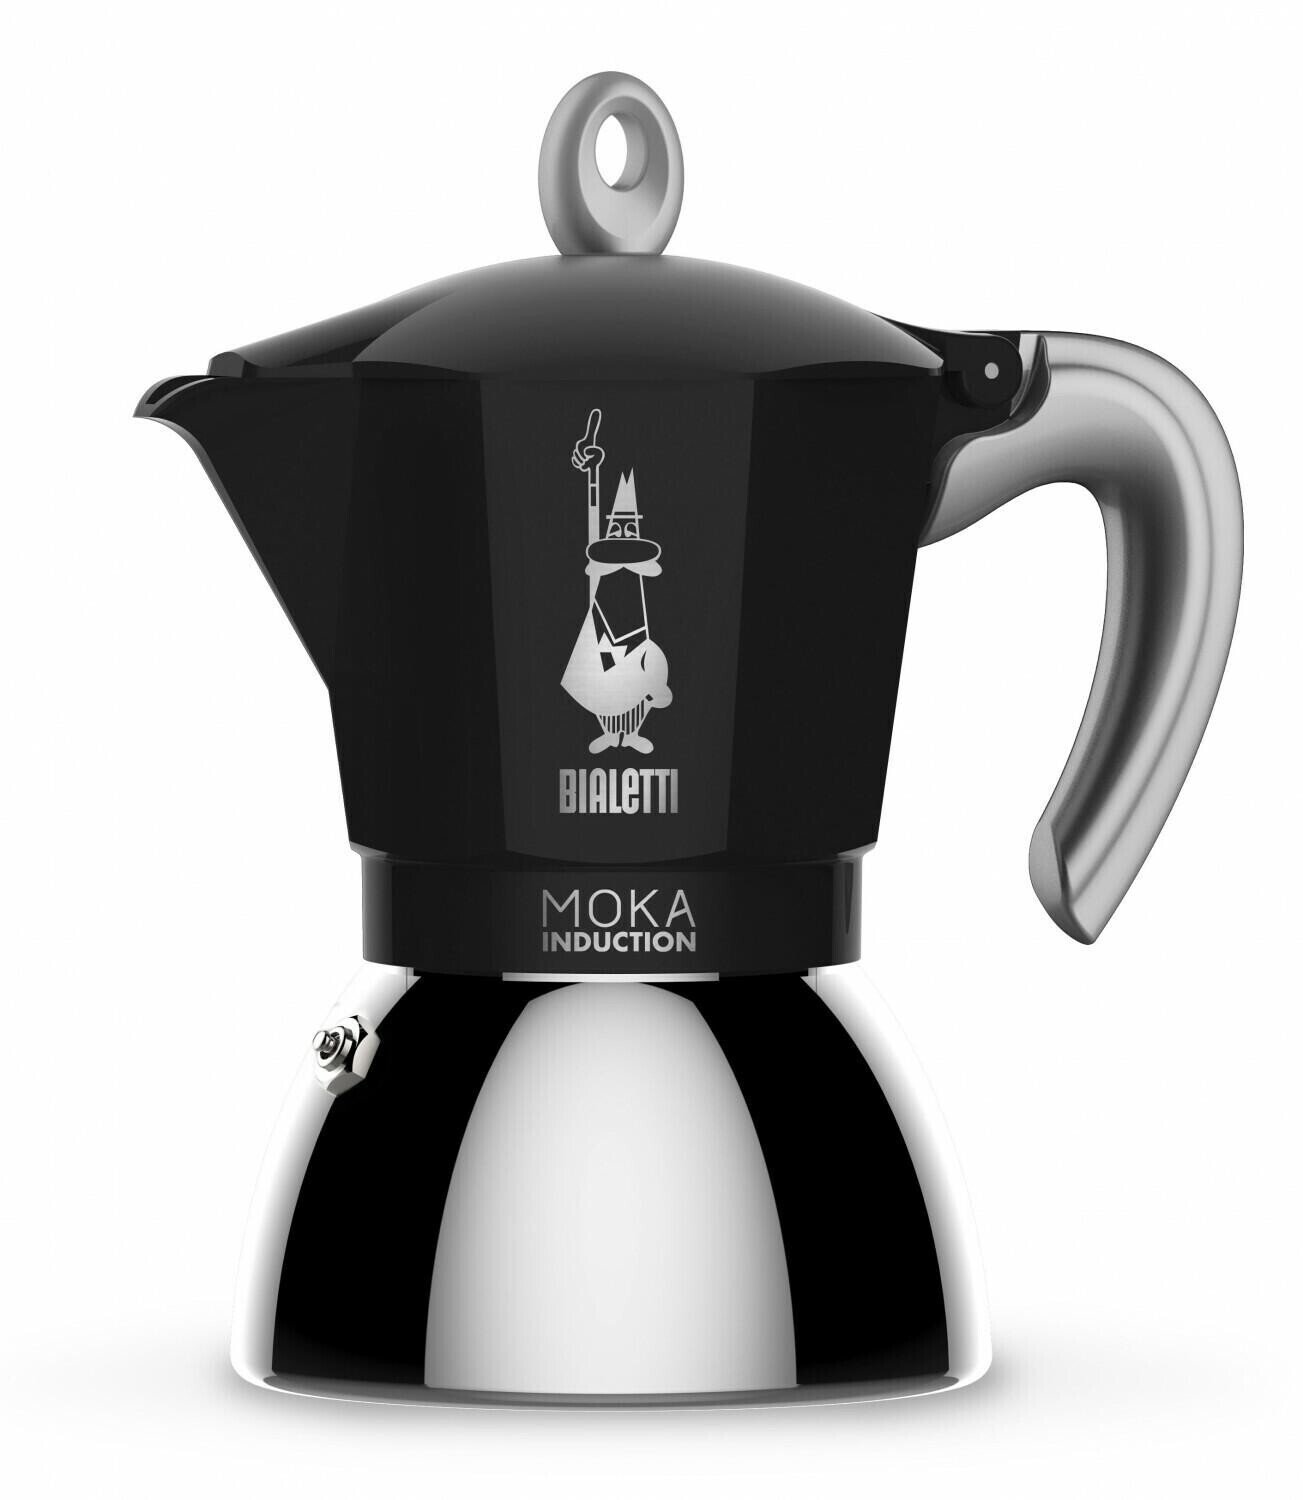 https://cdn.idealo.com/folder/Product/200760/1/200760151/s11_produktbild_max/bialetti-espresso-maker-moka-induction-black-capacity-6-cups.jpg